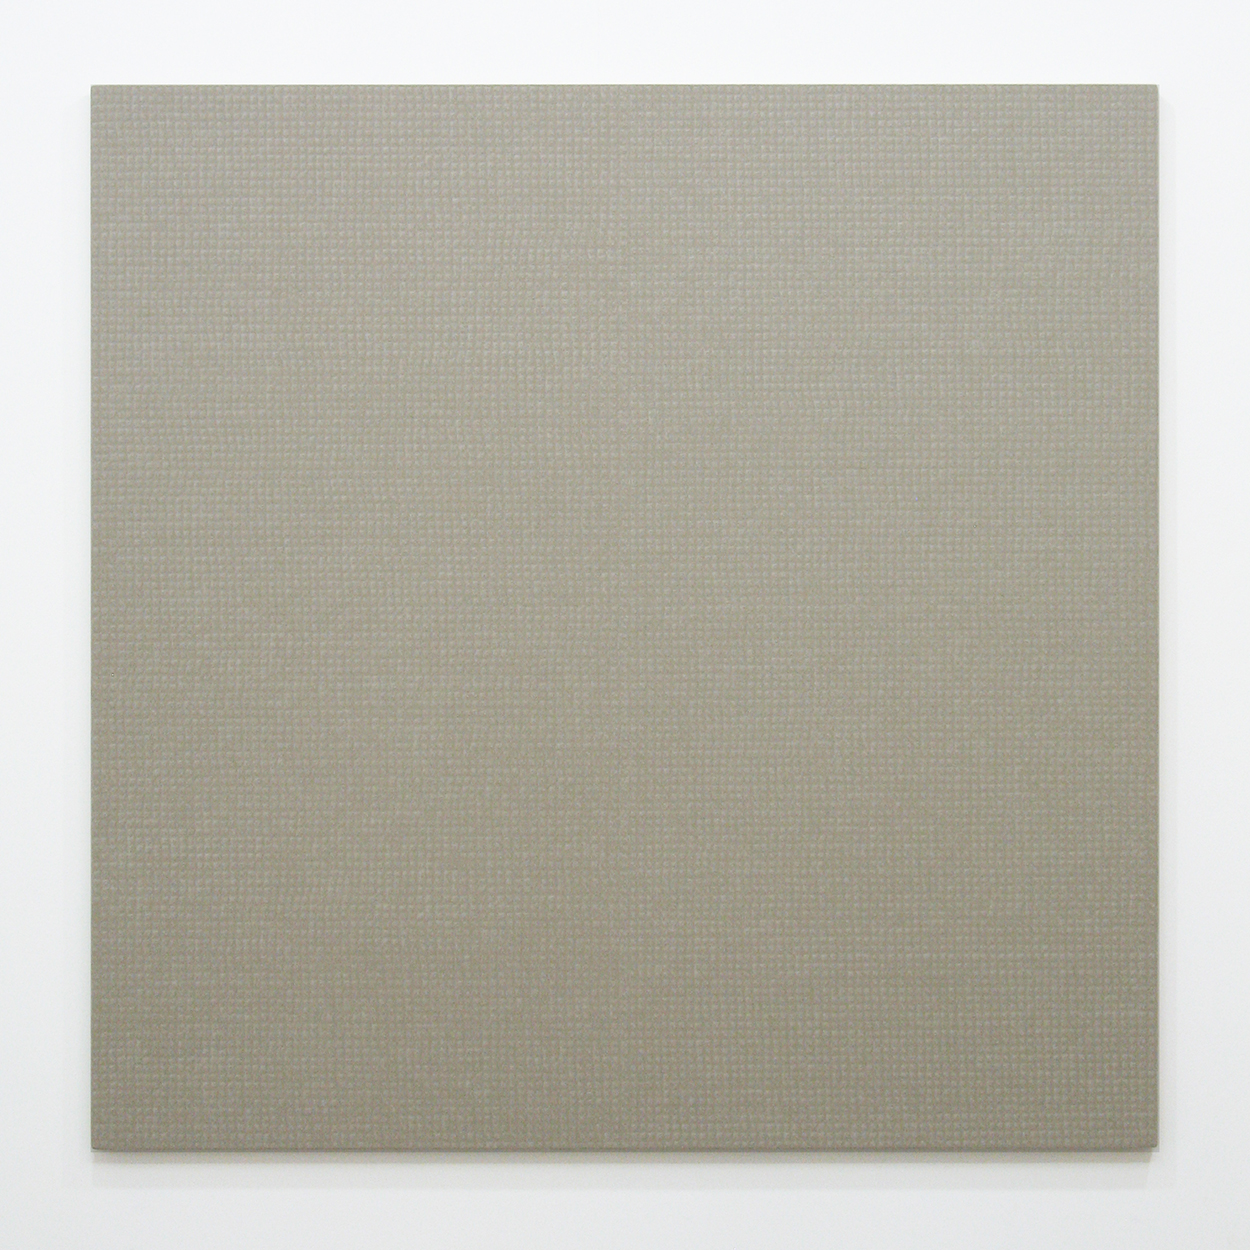 hemp drawing 10-12｜麻布ドローイング10-12, acrylic on raw canvas, 130 x 130 cm, 2010